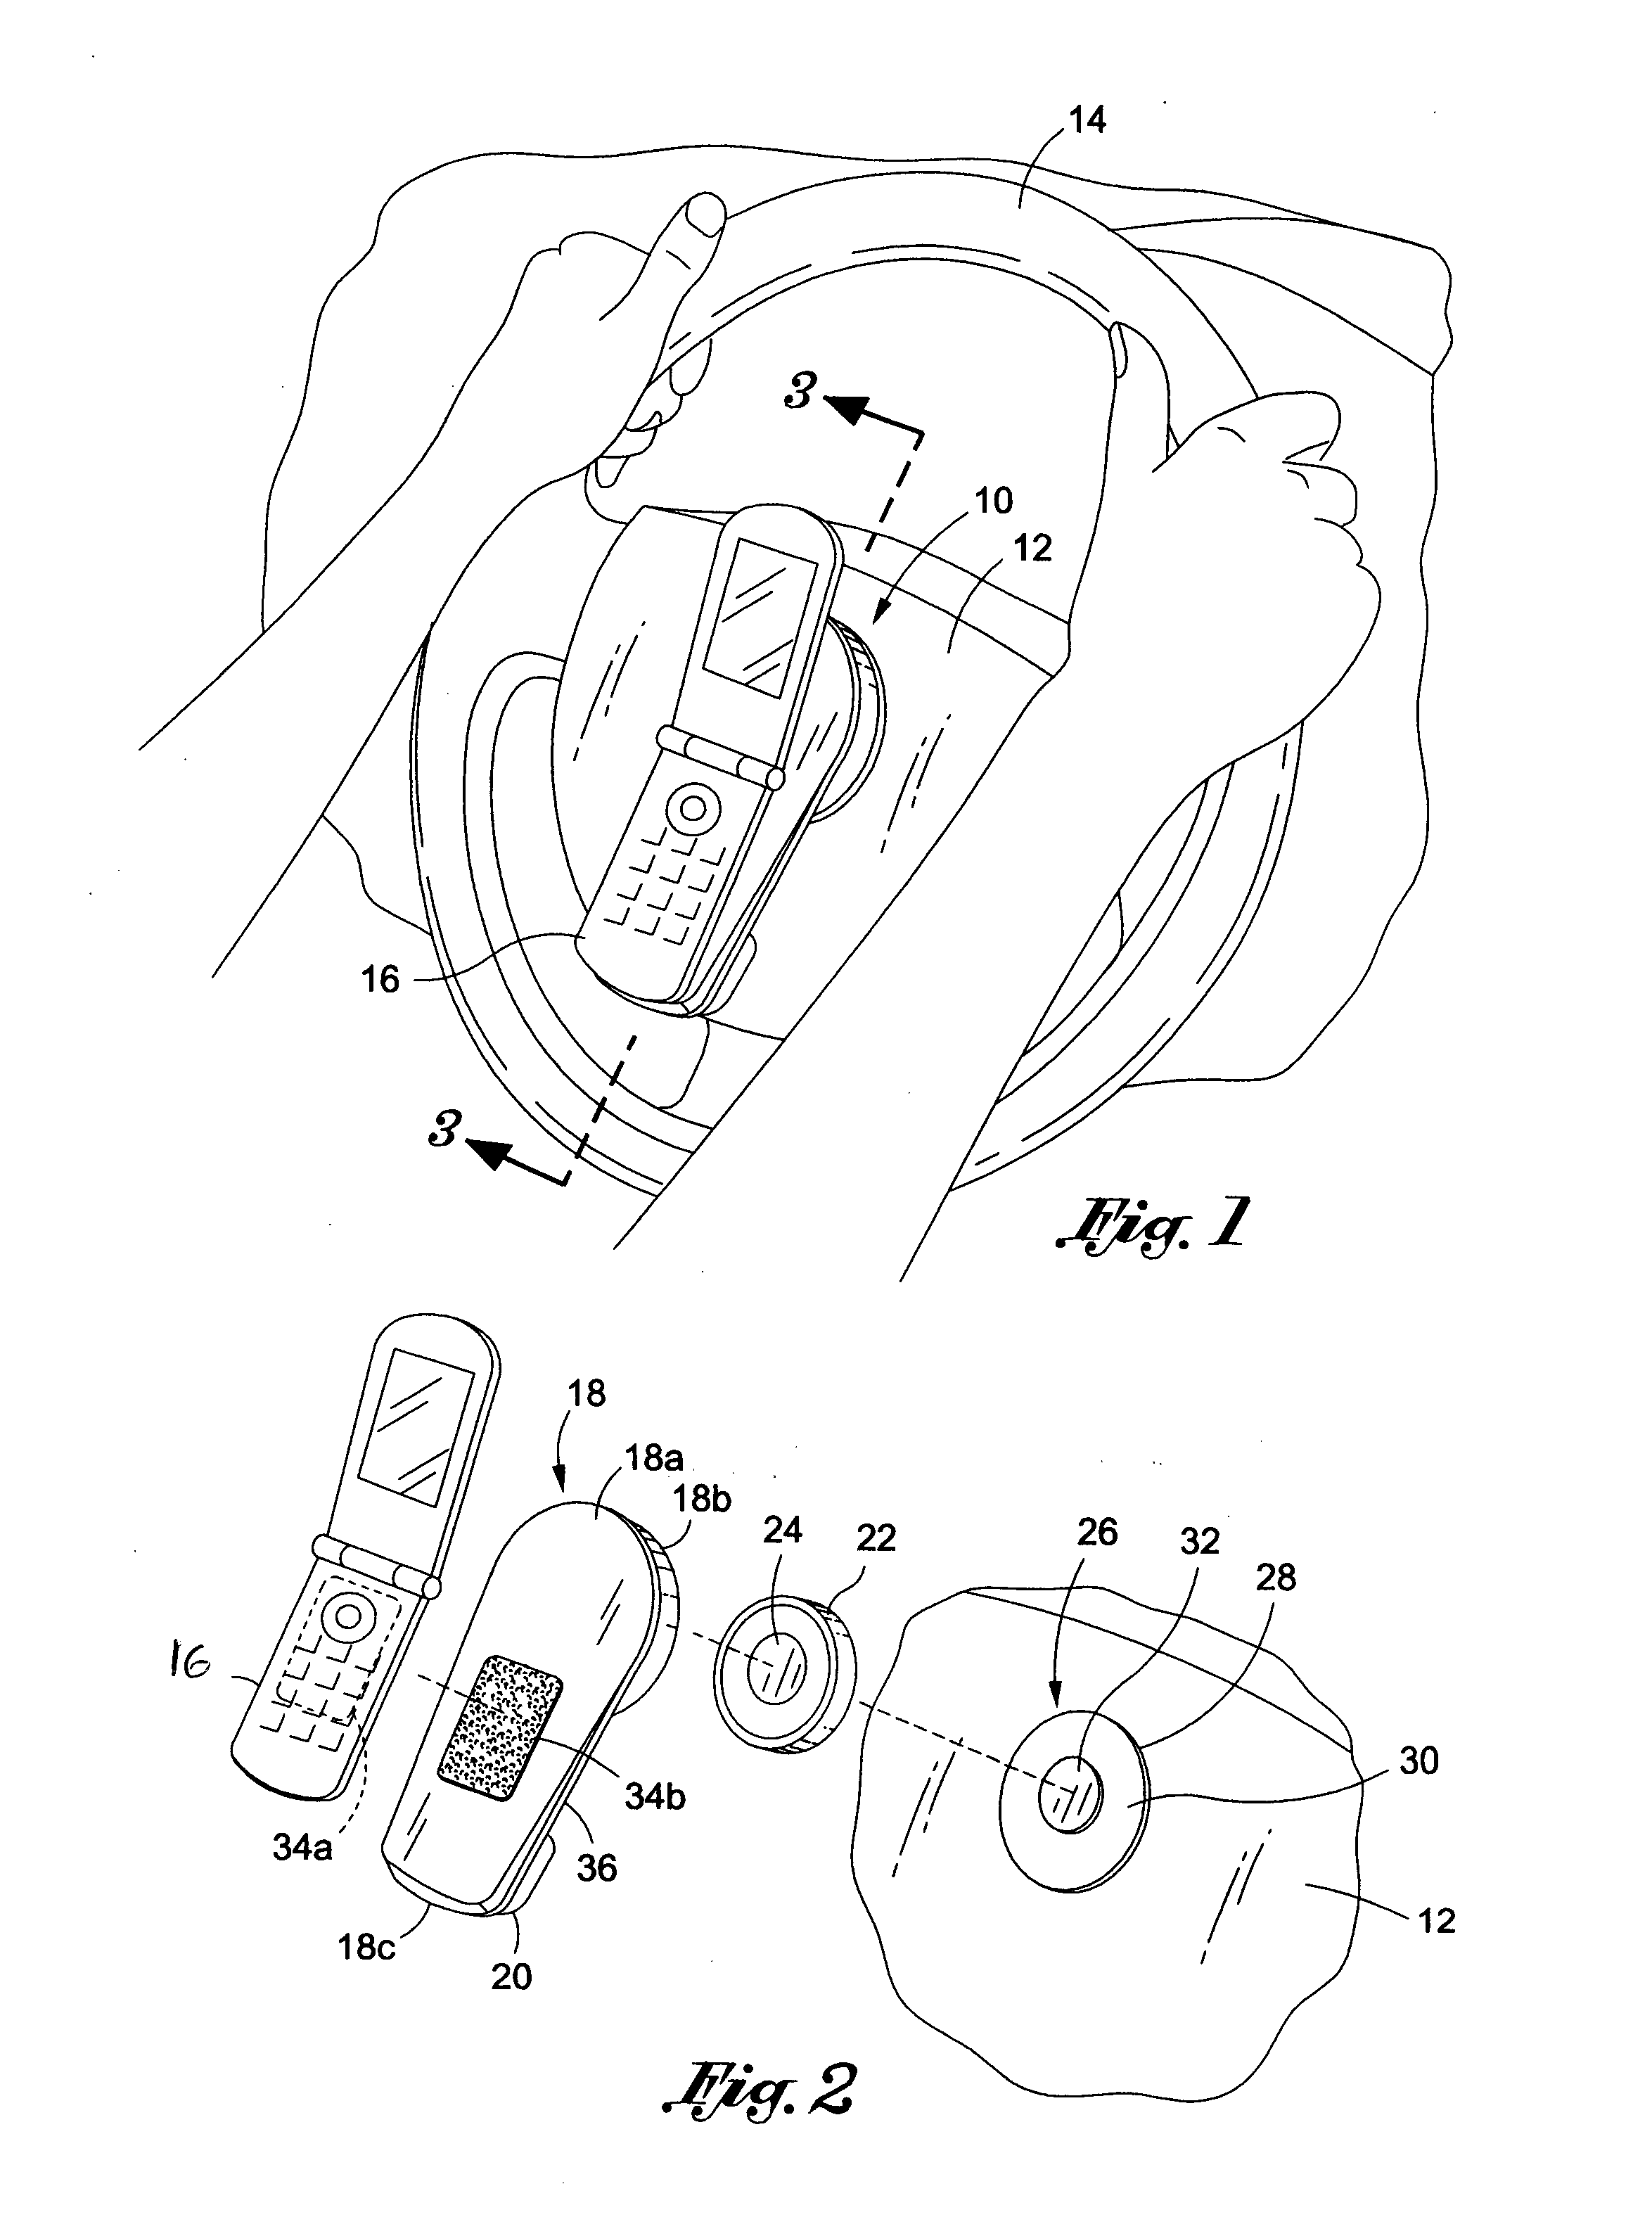 Handheld device holder for vehicle's steering wheel